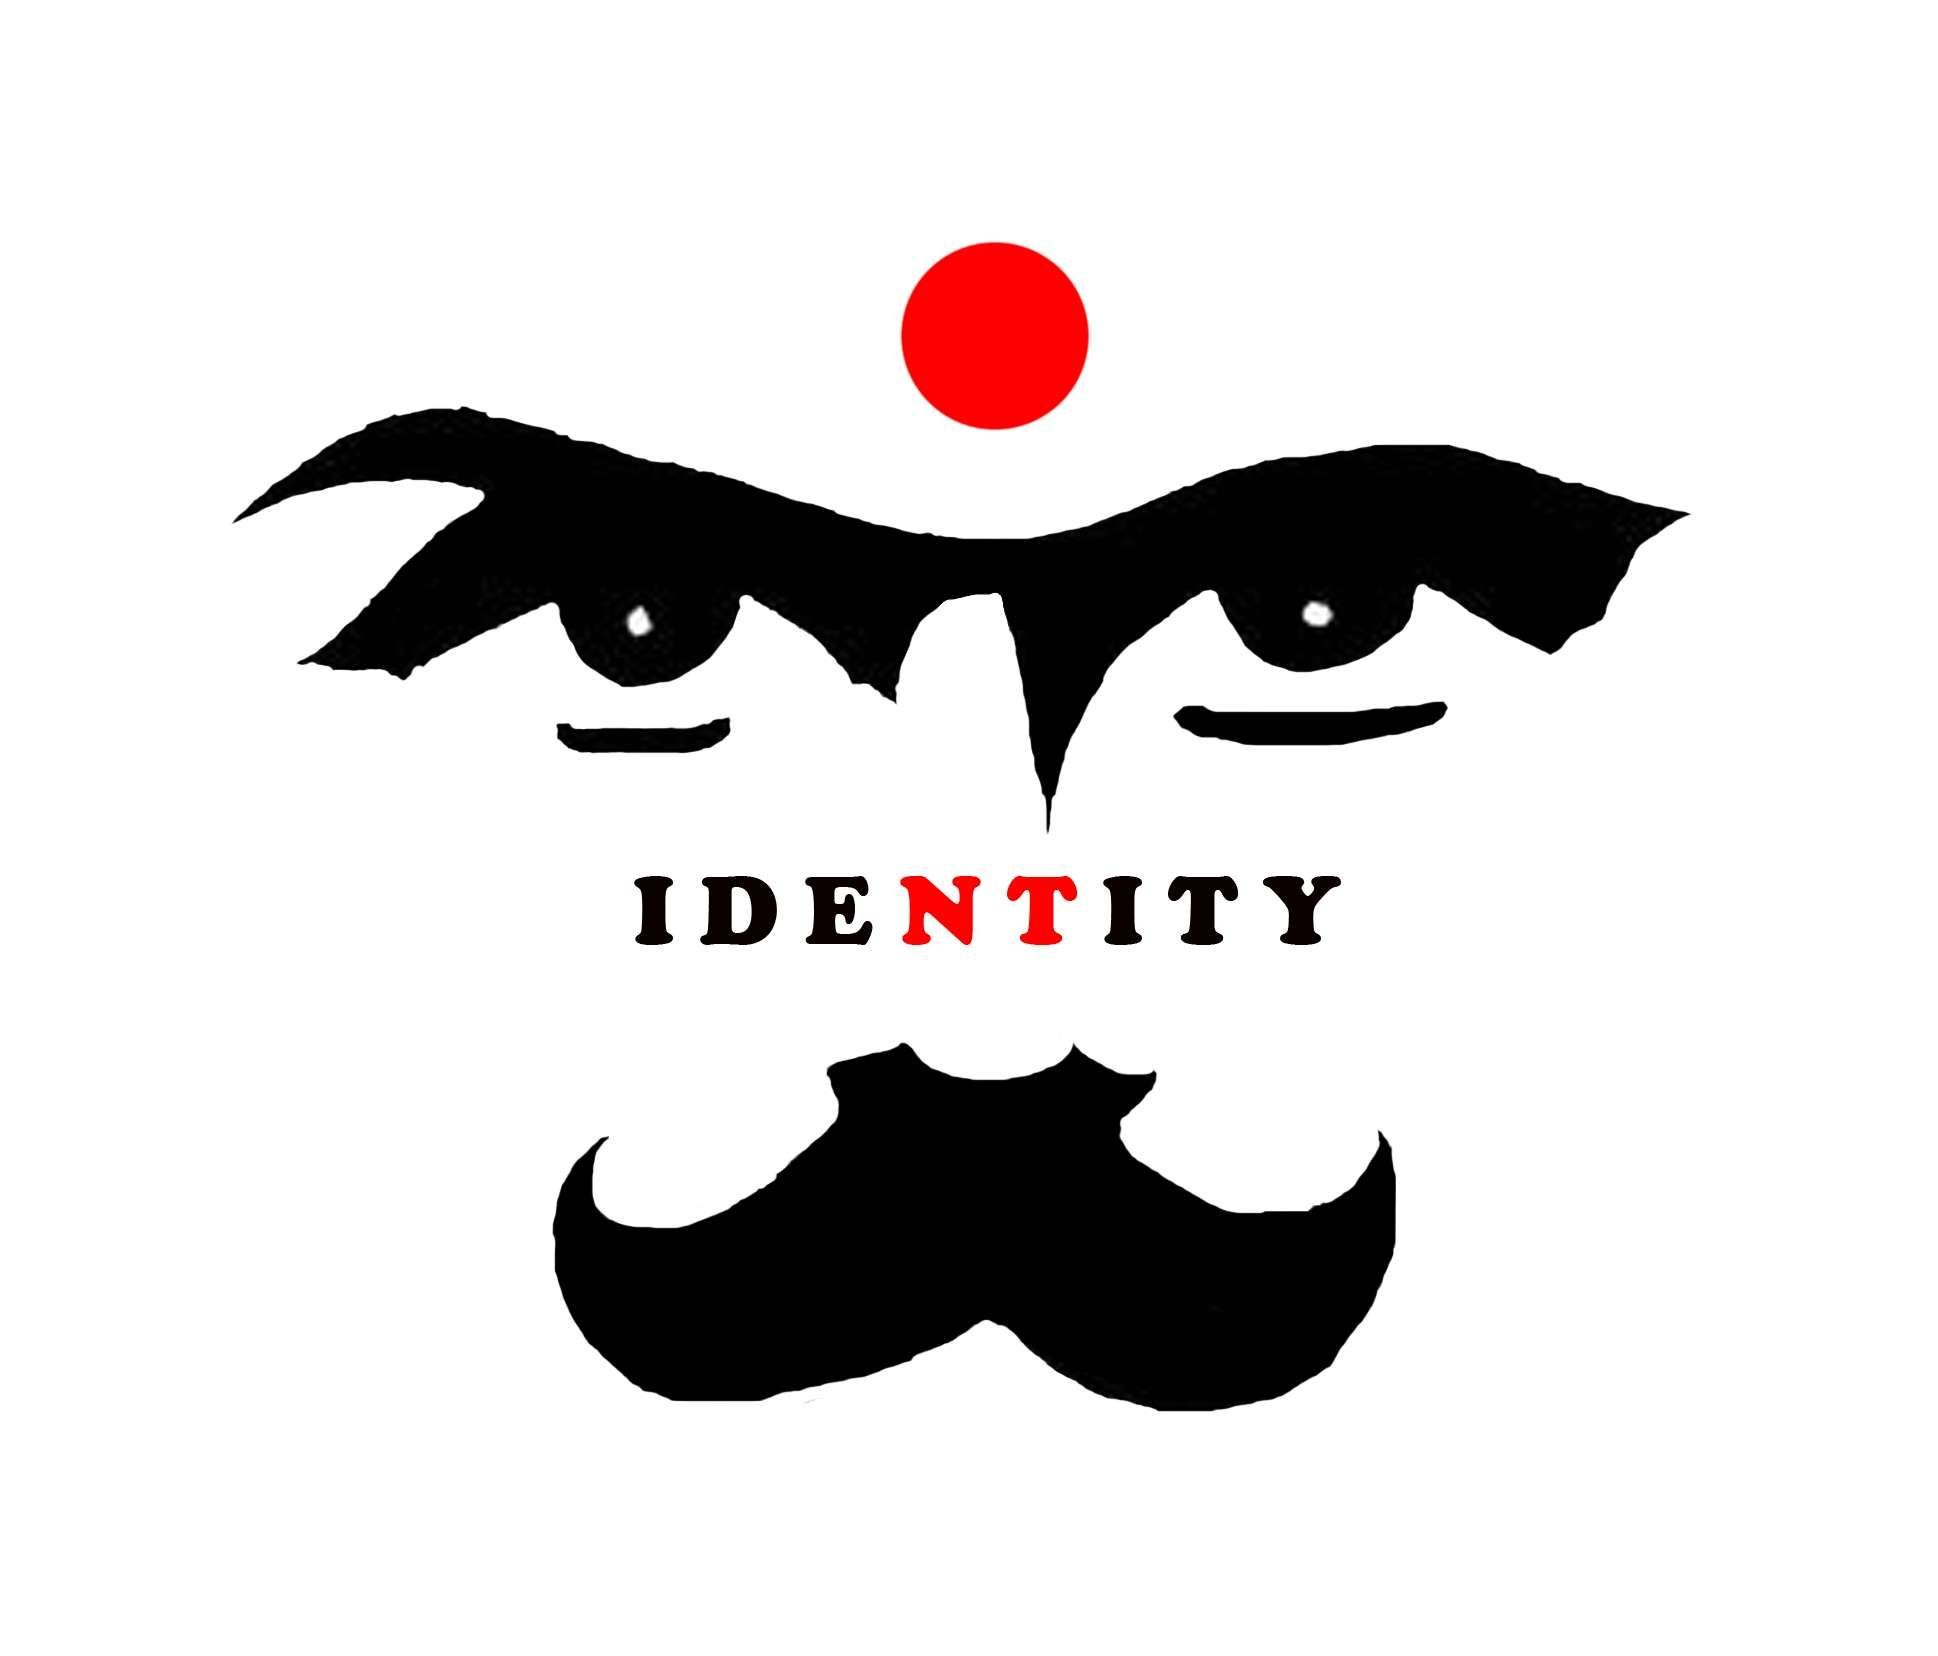 bharathiyar #cool #identity. Identity, Emoji wallpaper iphone